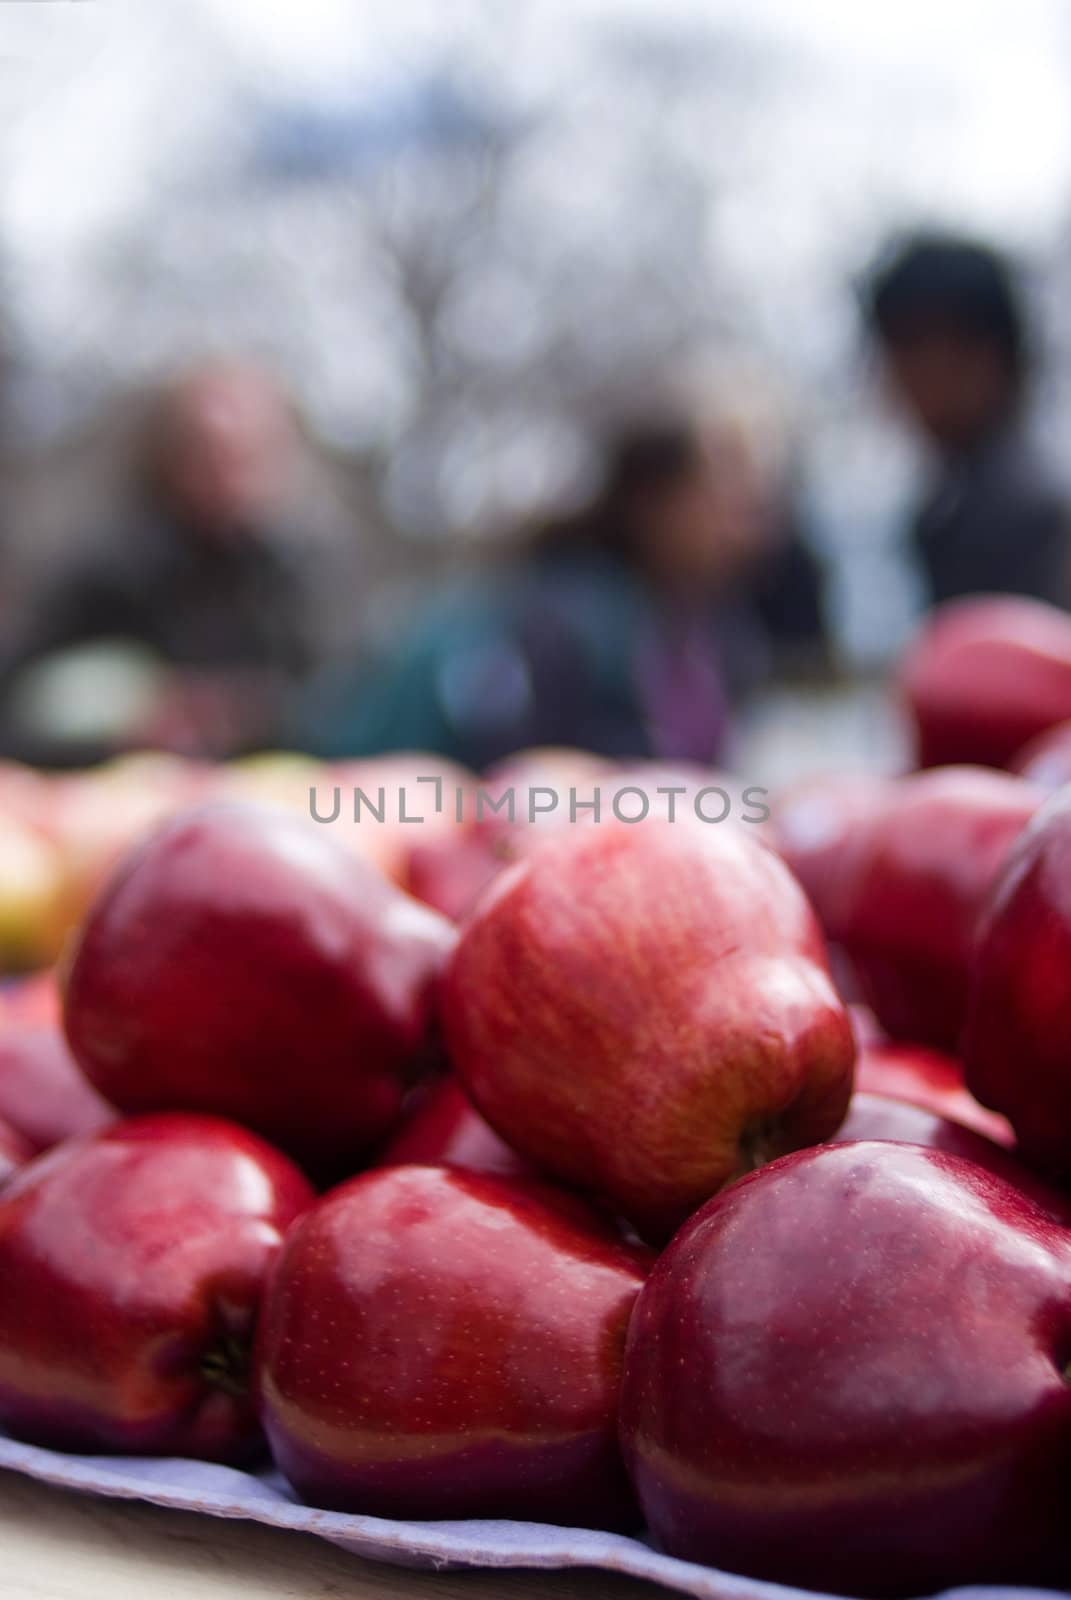 Apples on a table by edan